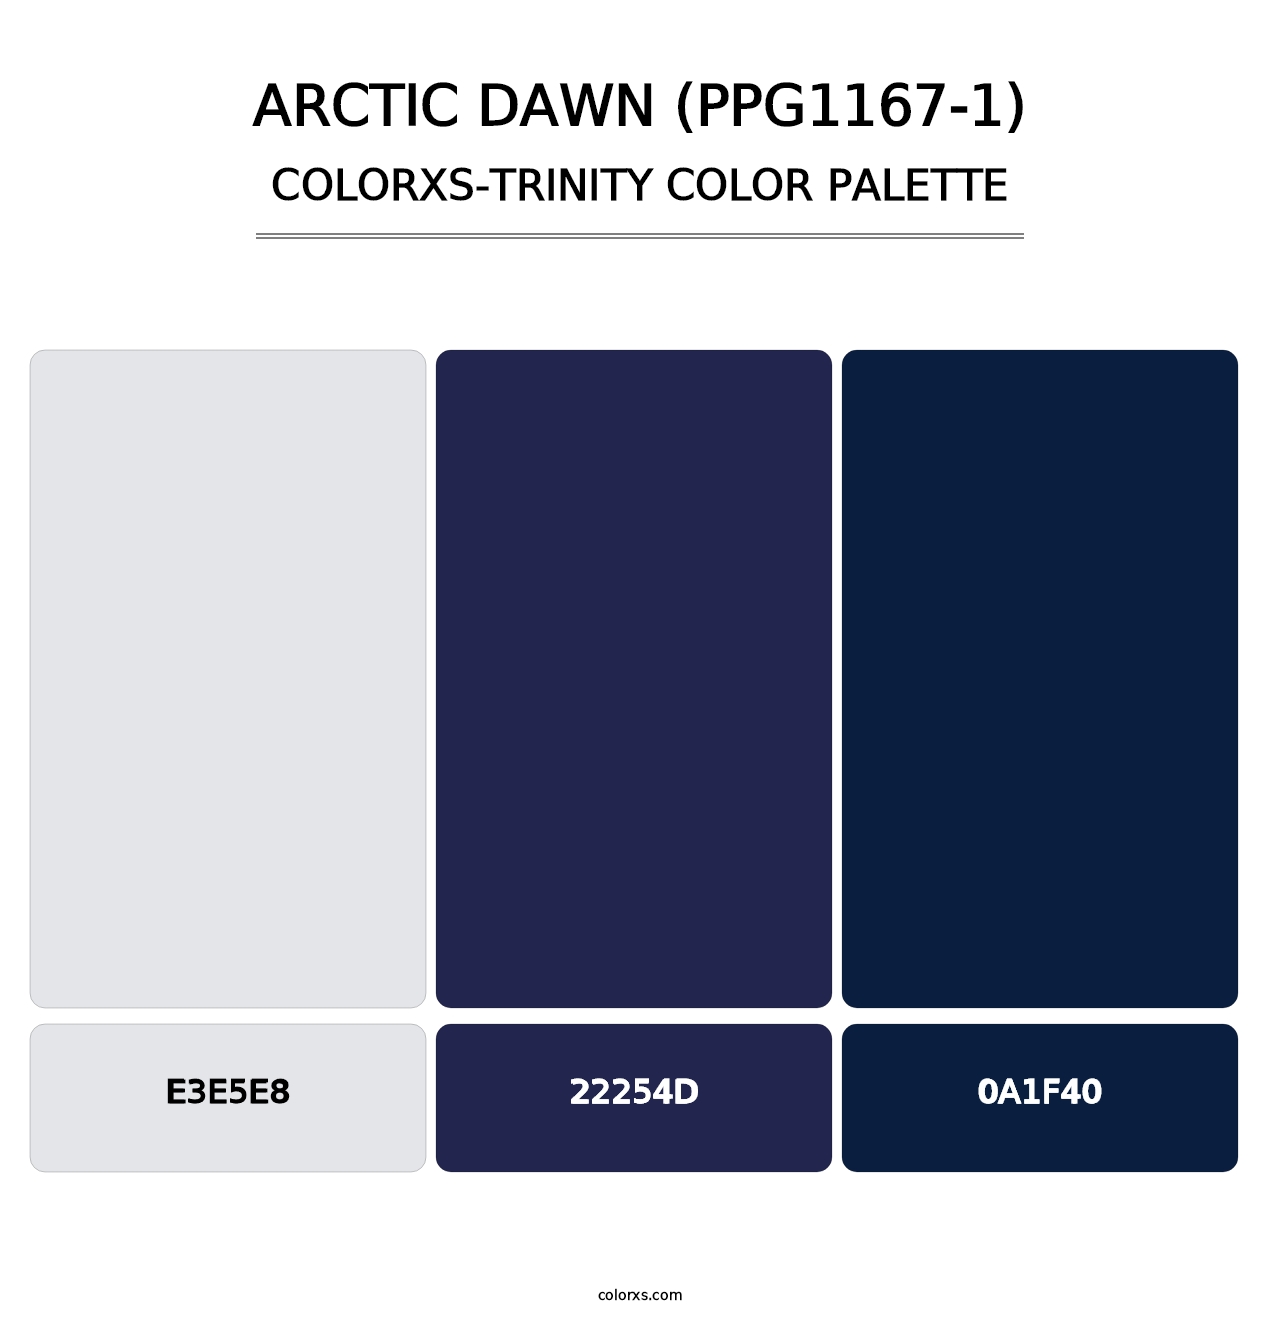 Arctic Dawn (PPG1167-1) - Colorxs Trinity Palette